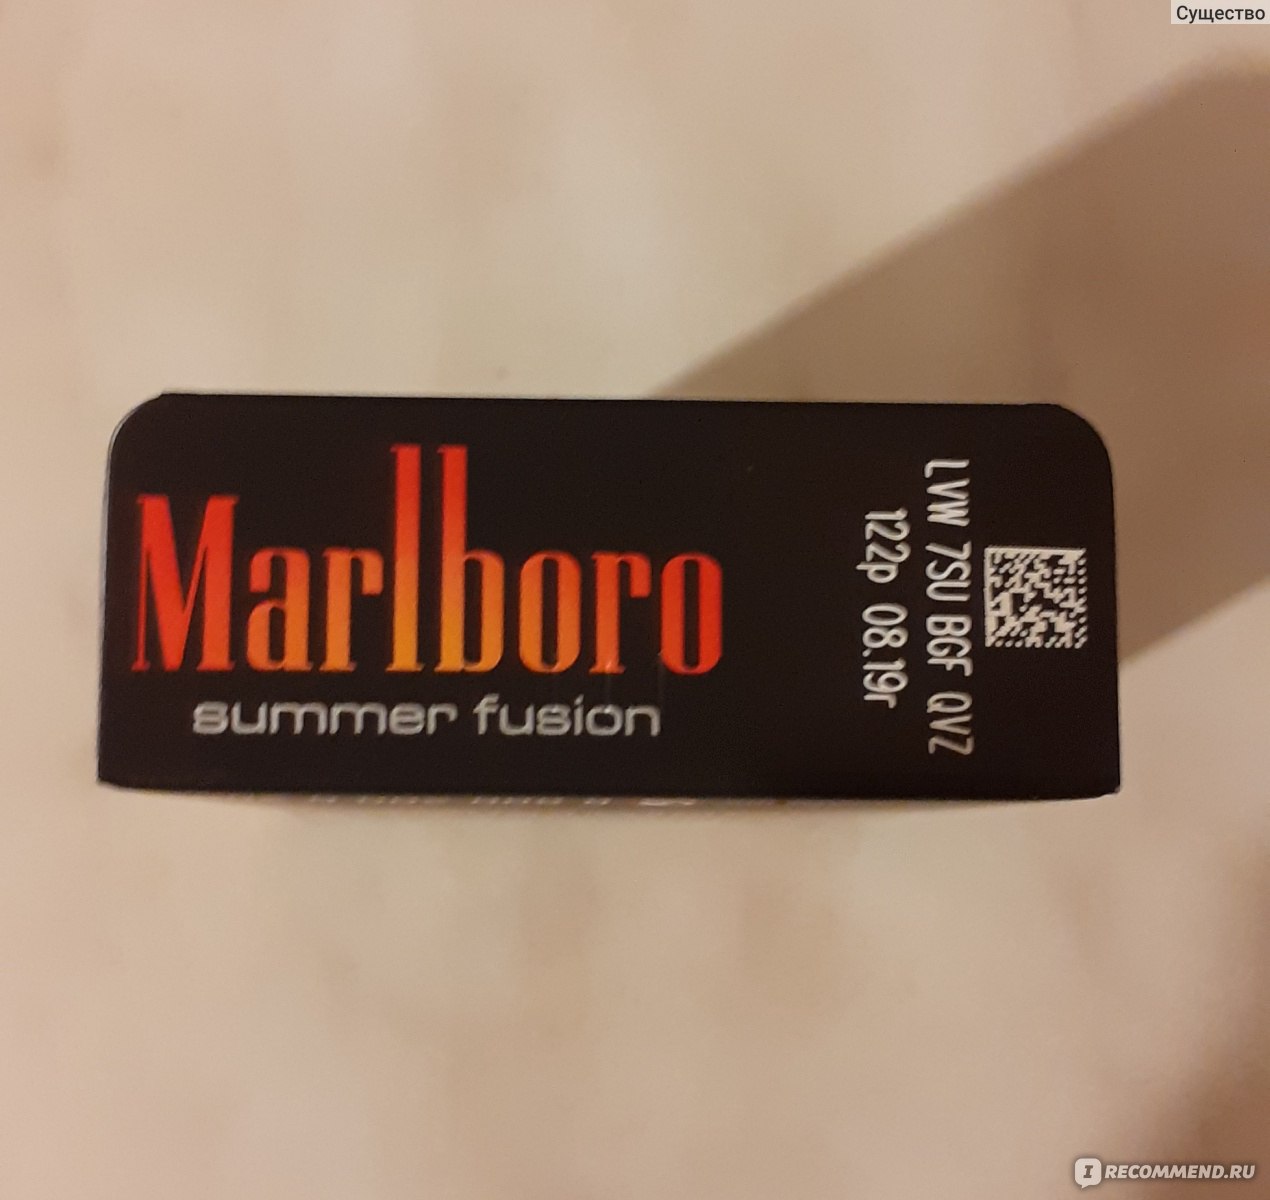 Qr код сигарет. Сигареты Marlboro Summer Fusion. Мальборо с 2 кнопками саммер Фьюжн. Marlboro Summer Fusion МТ. Мальборо компакт штрих.